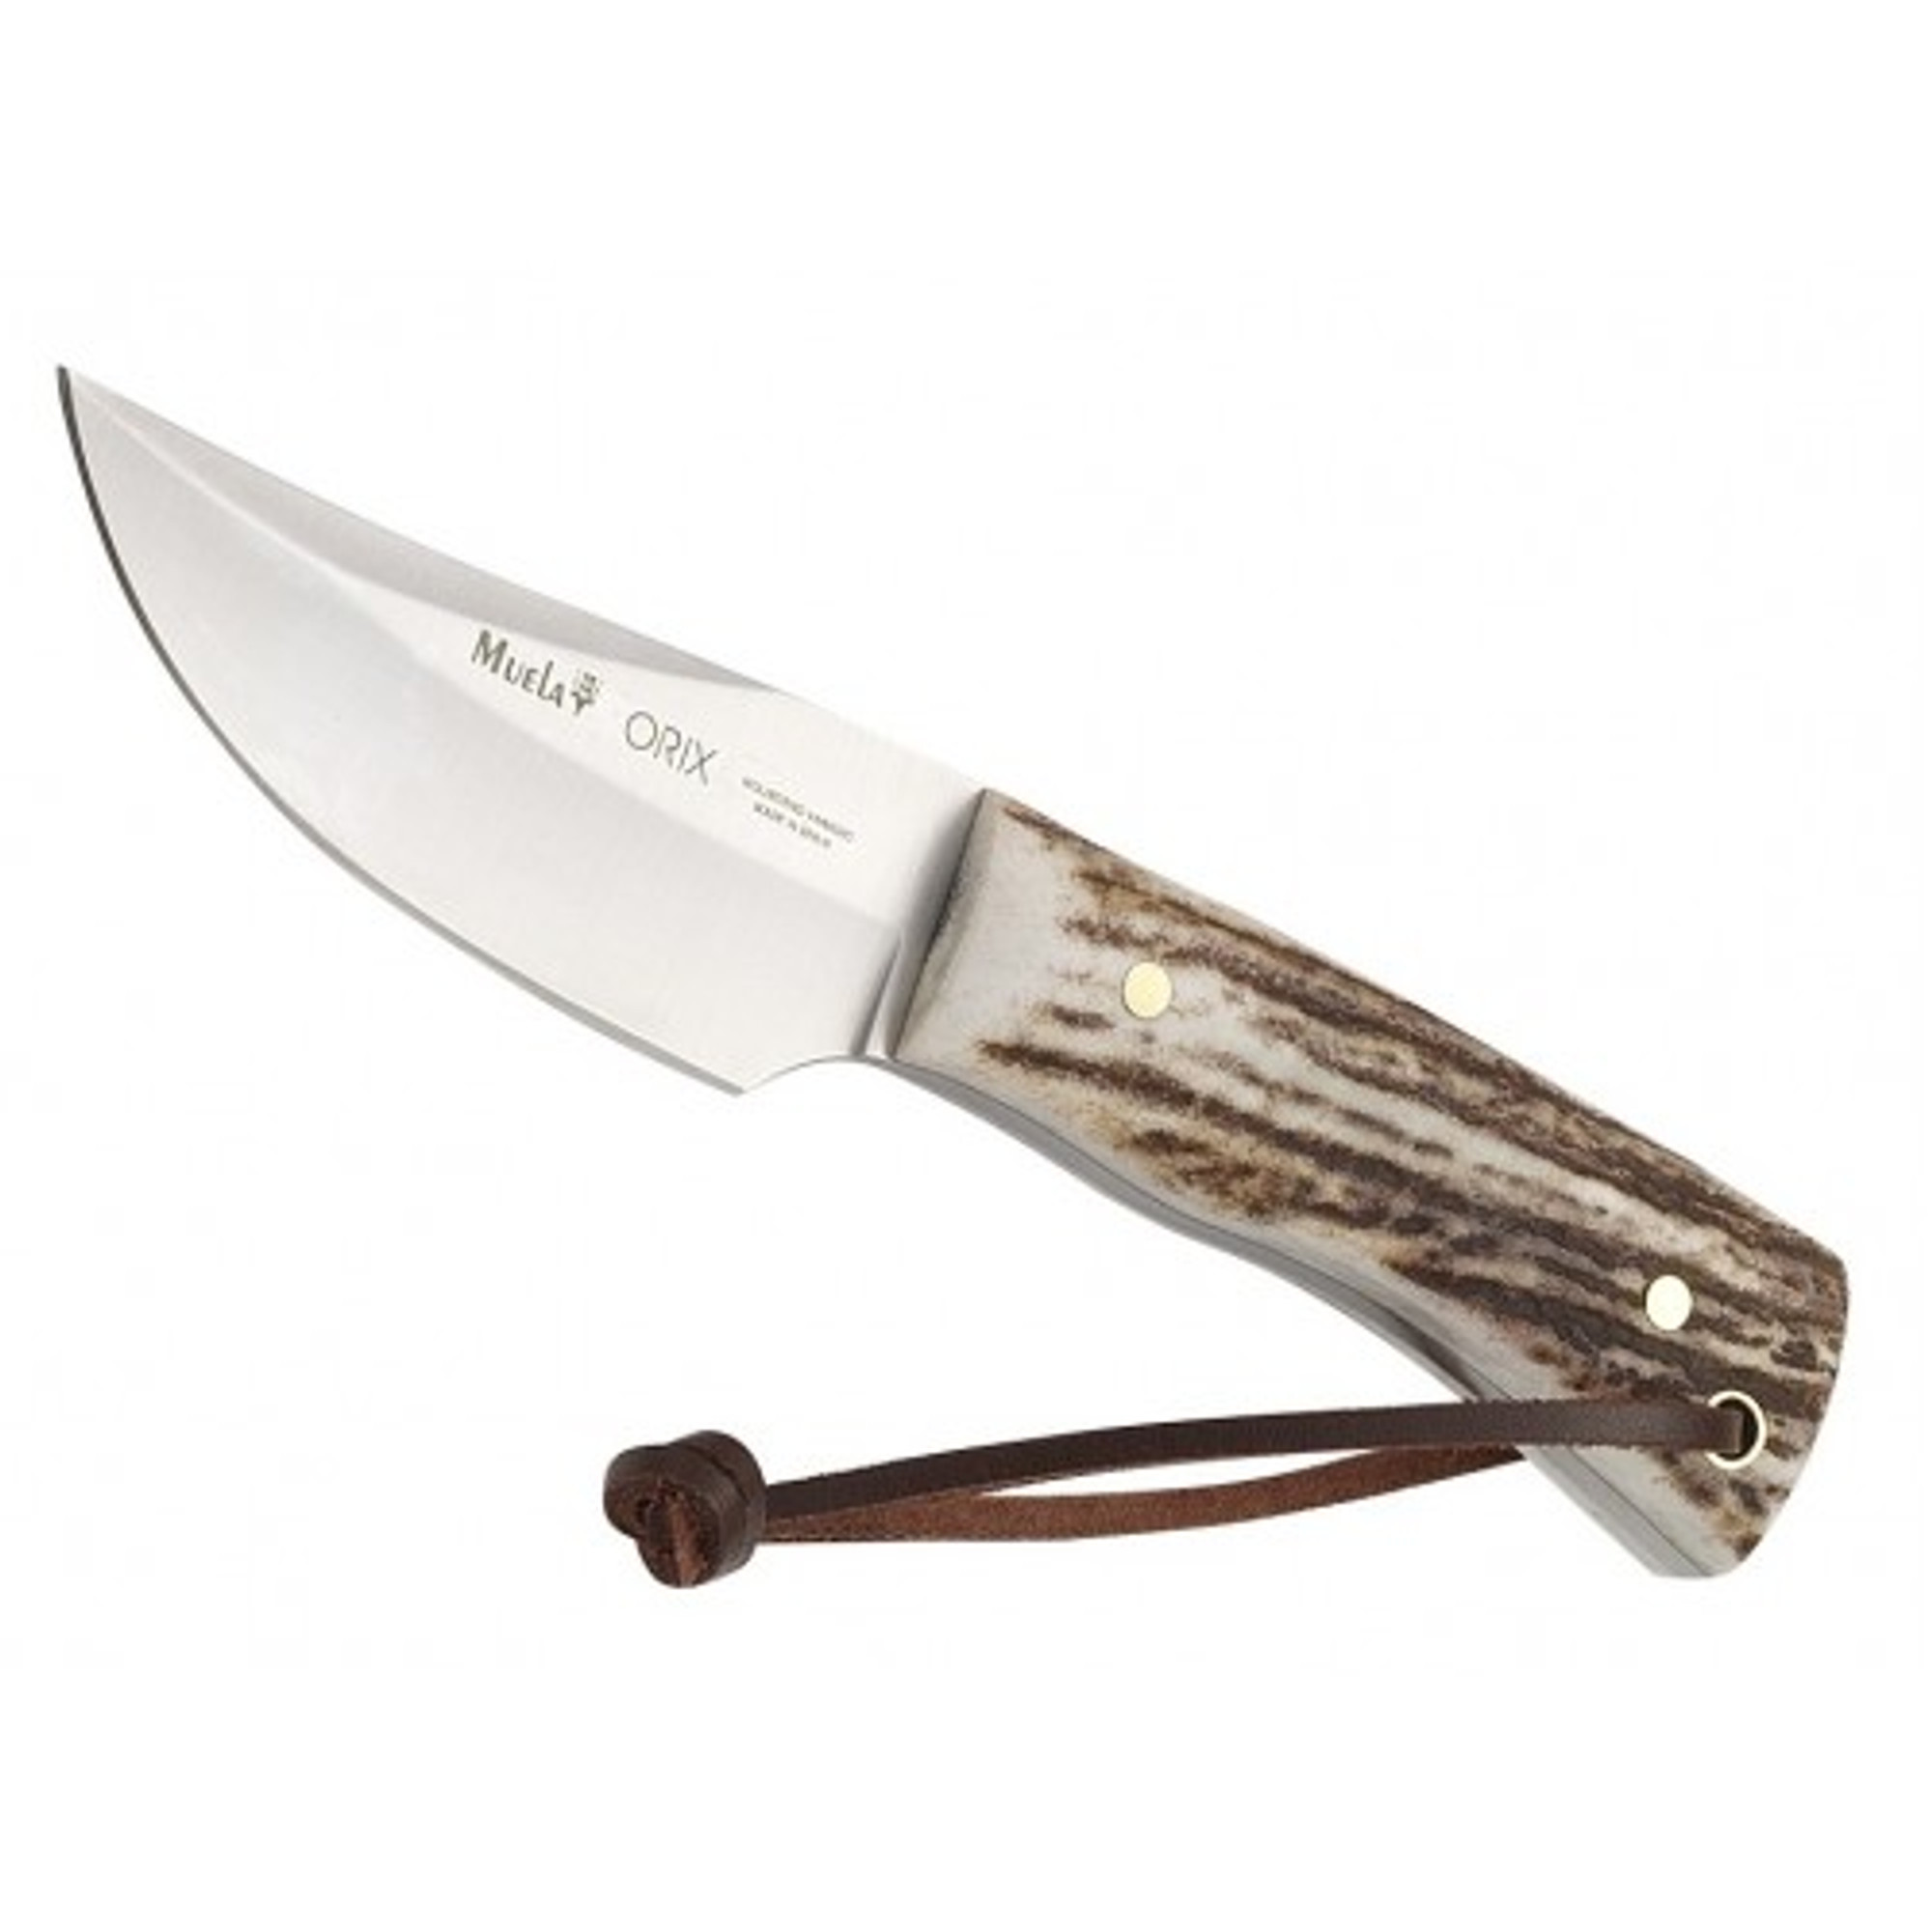 MUELA ORIX-8A, X50CrMoV15, 3-1/8" Fixed Blade Skinning Knife, Deer Horn Handle